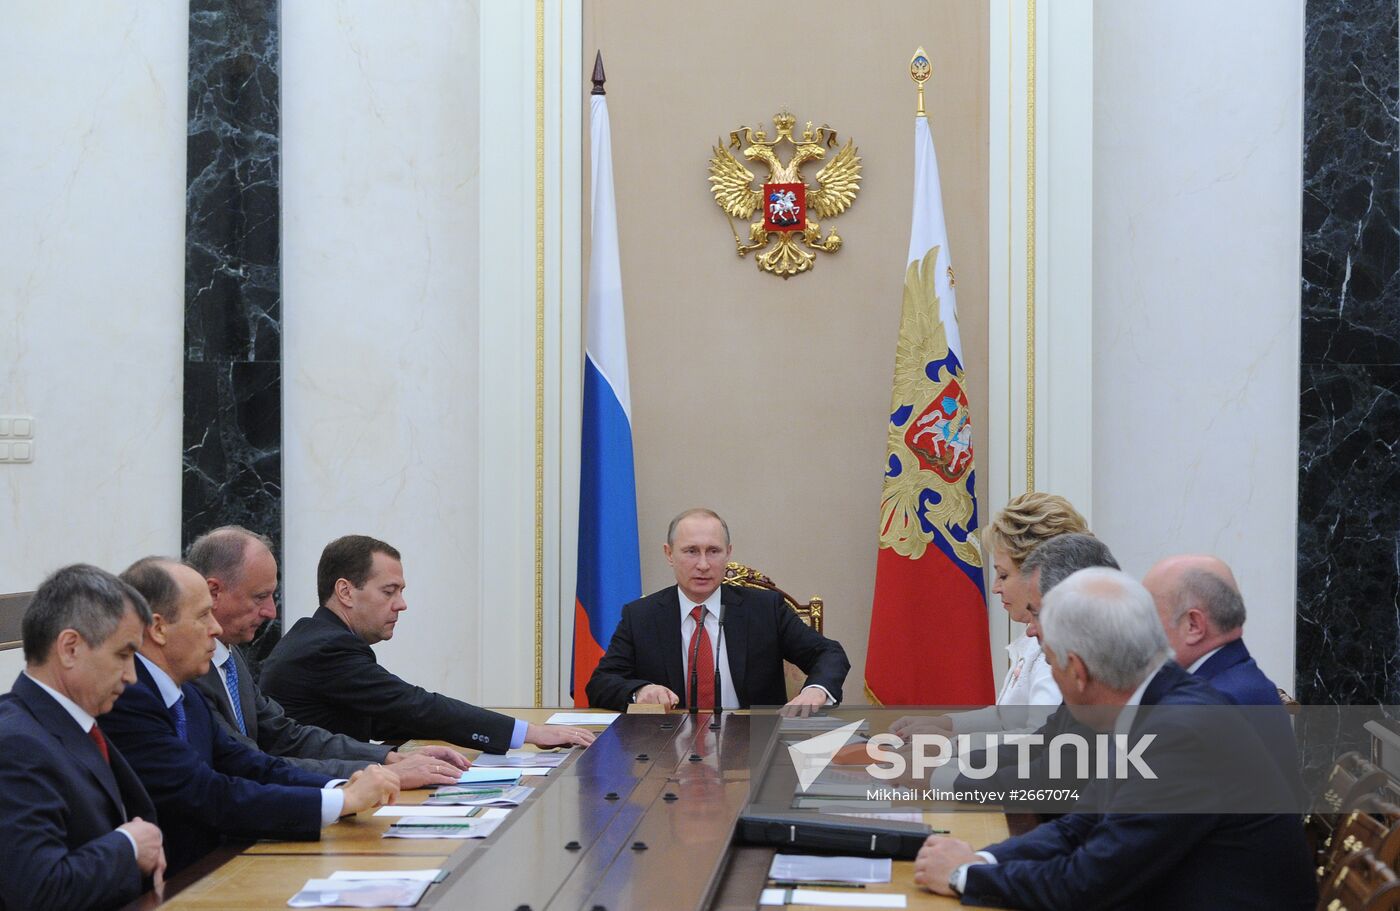 President Vladimir Putin conducts Security Council meeting